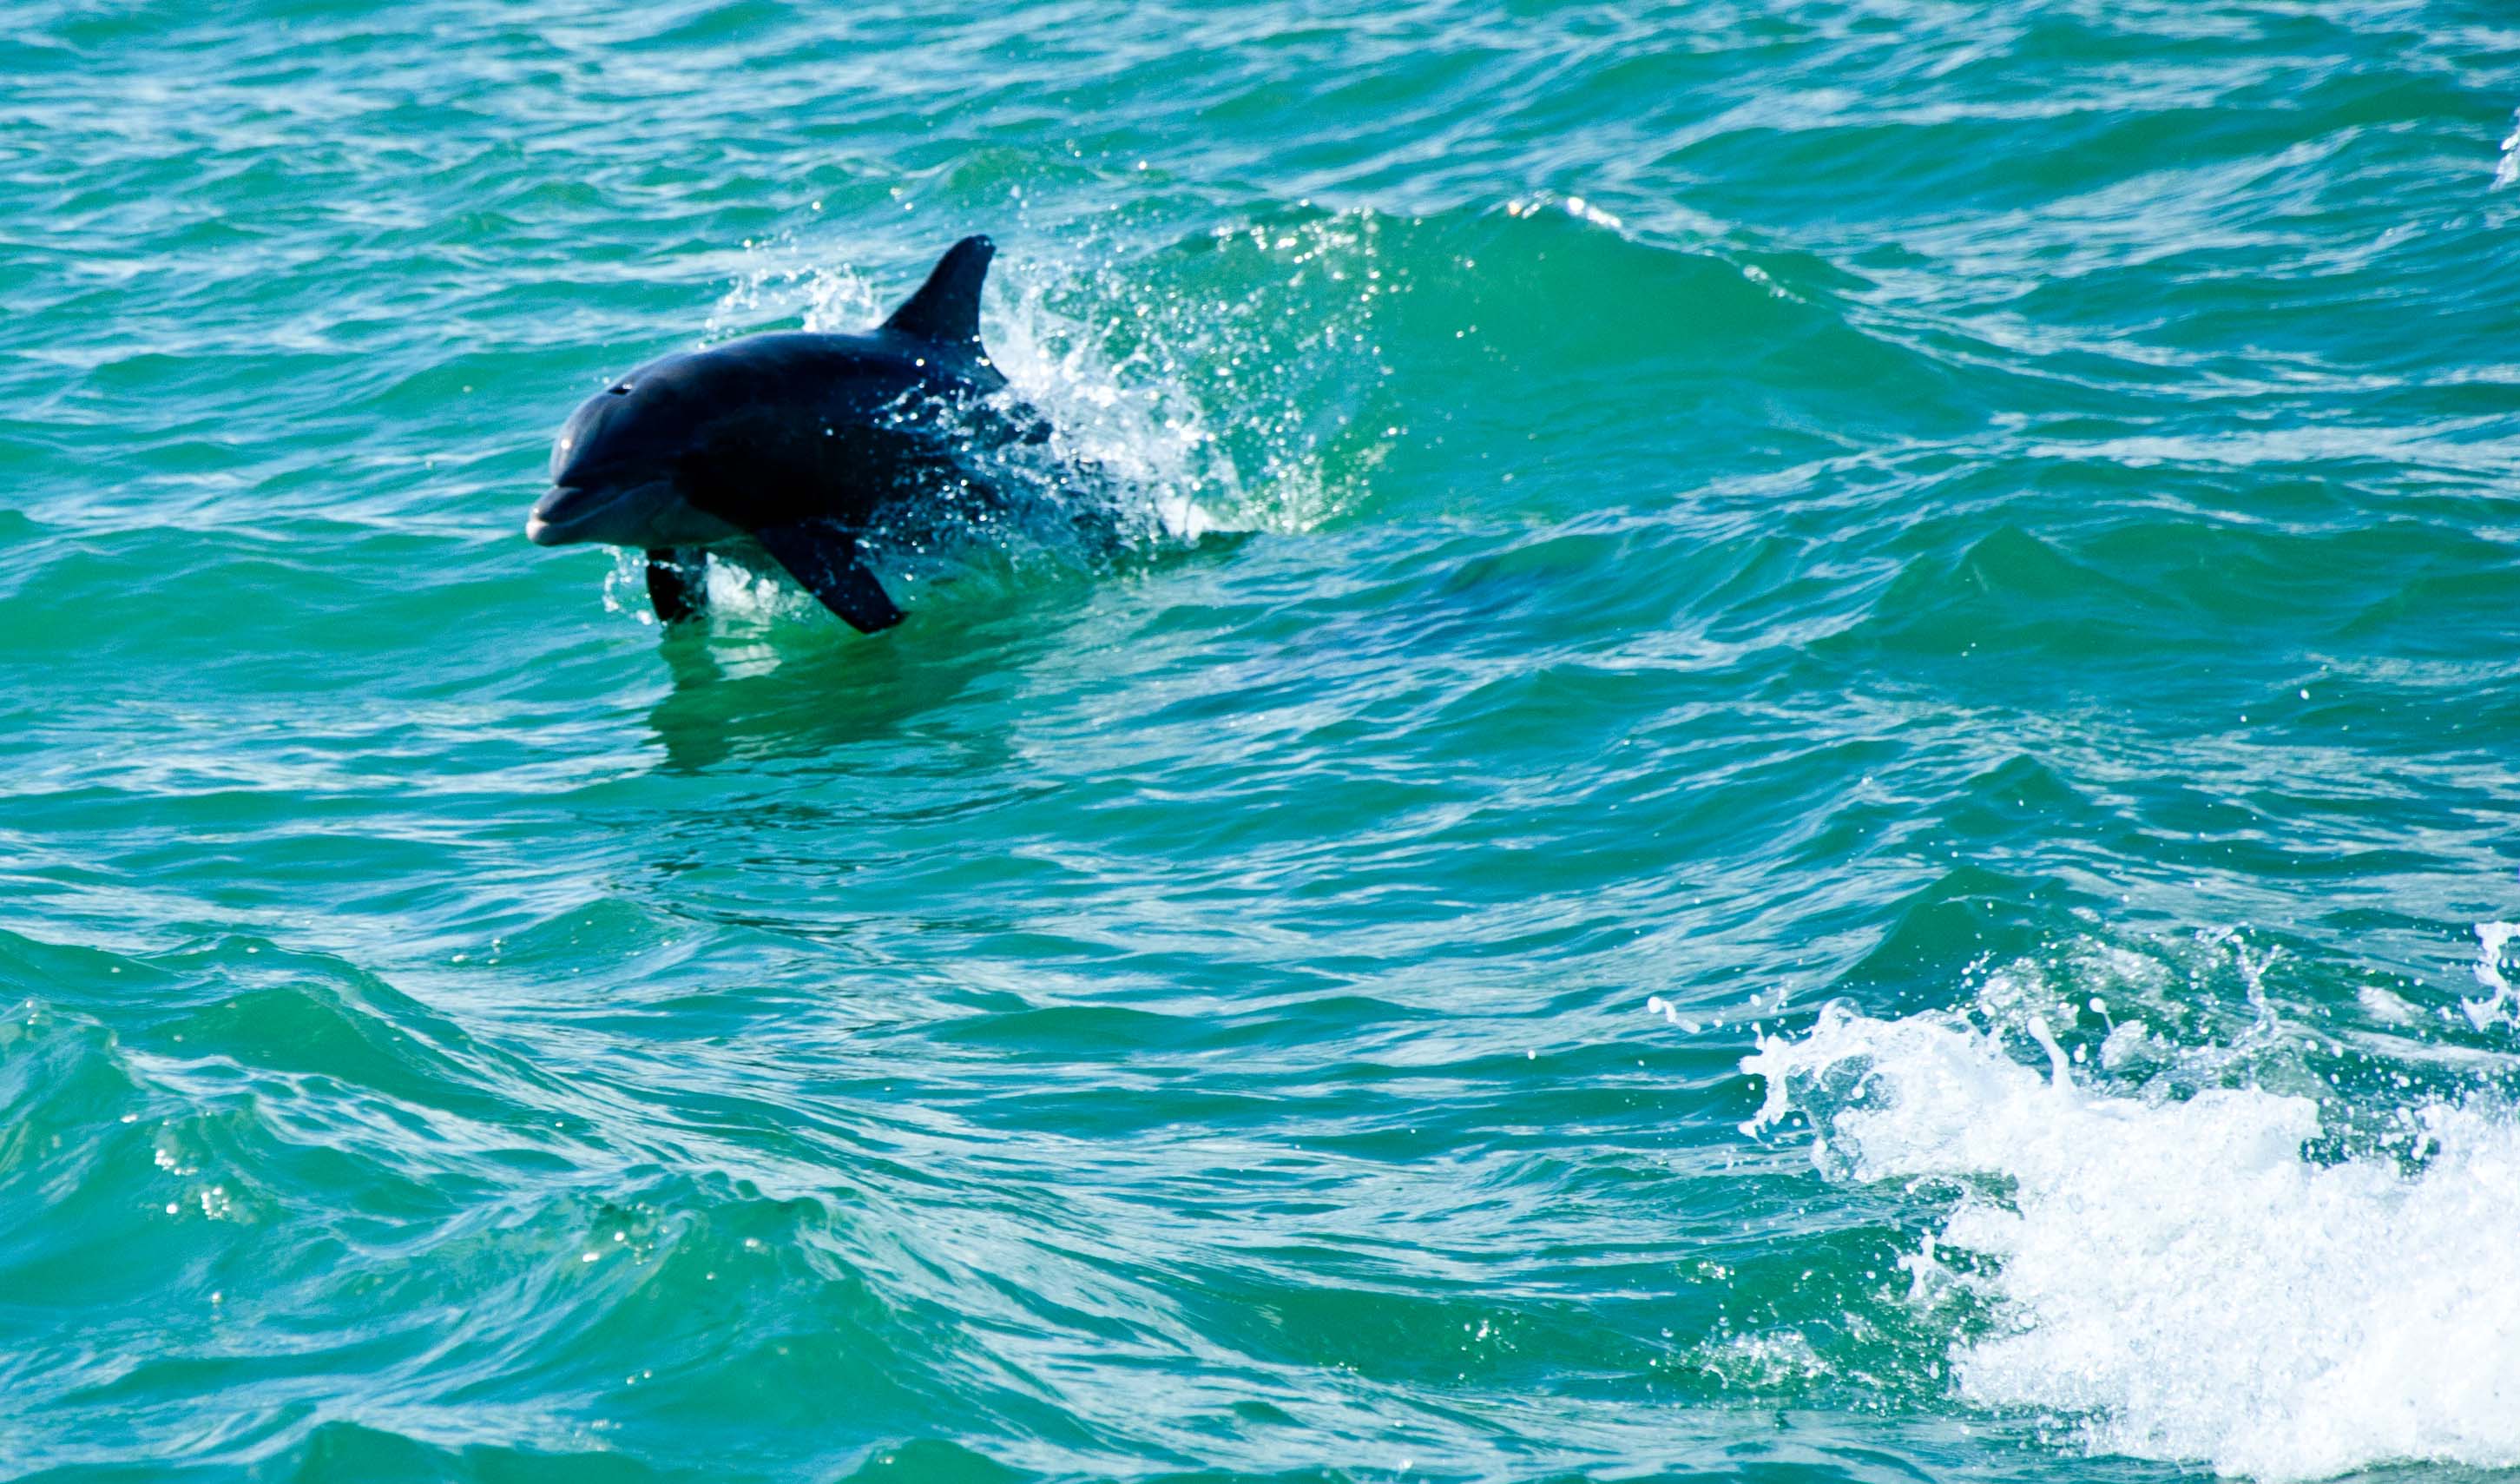 File:Dolphin in water, Boca Raton.jpg - Wikimedia Commons